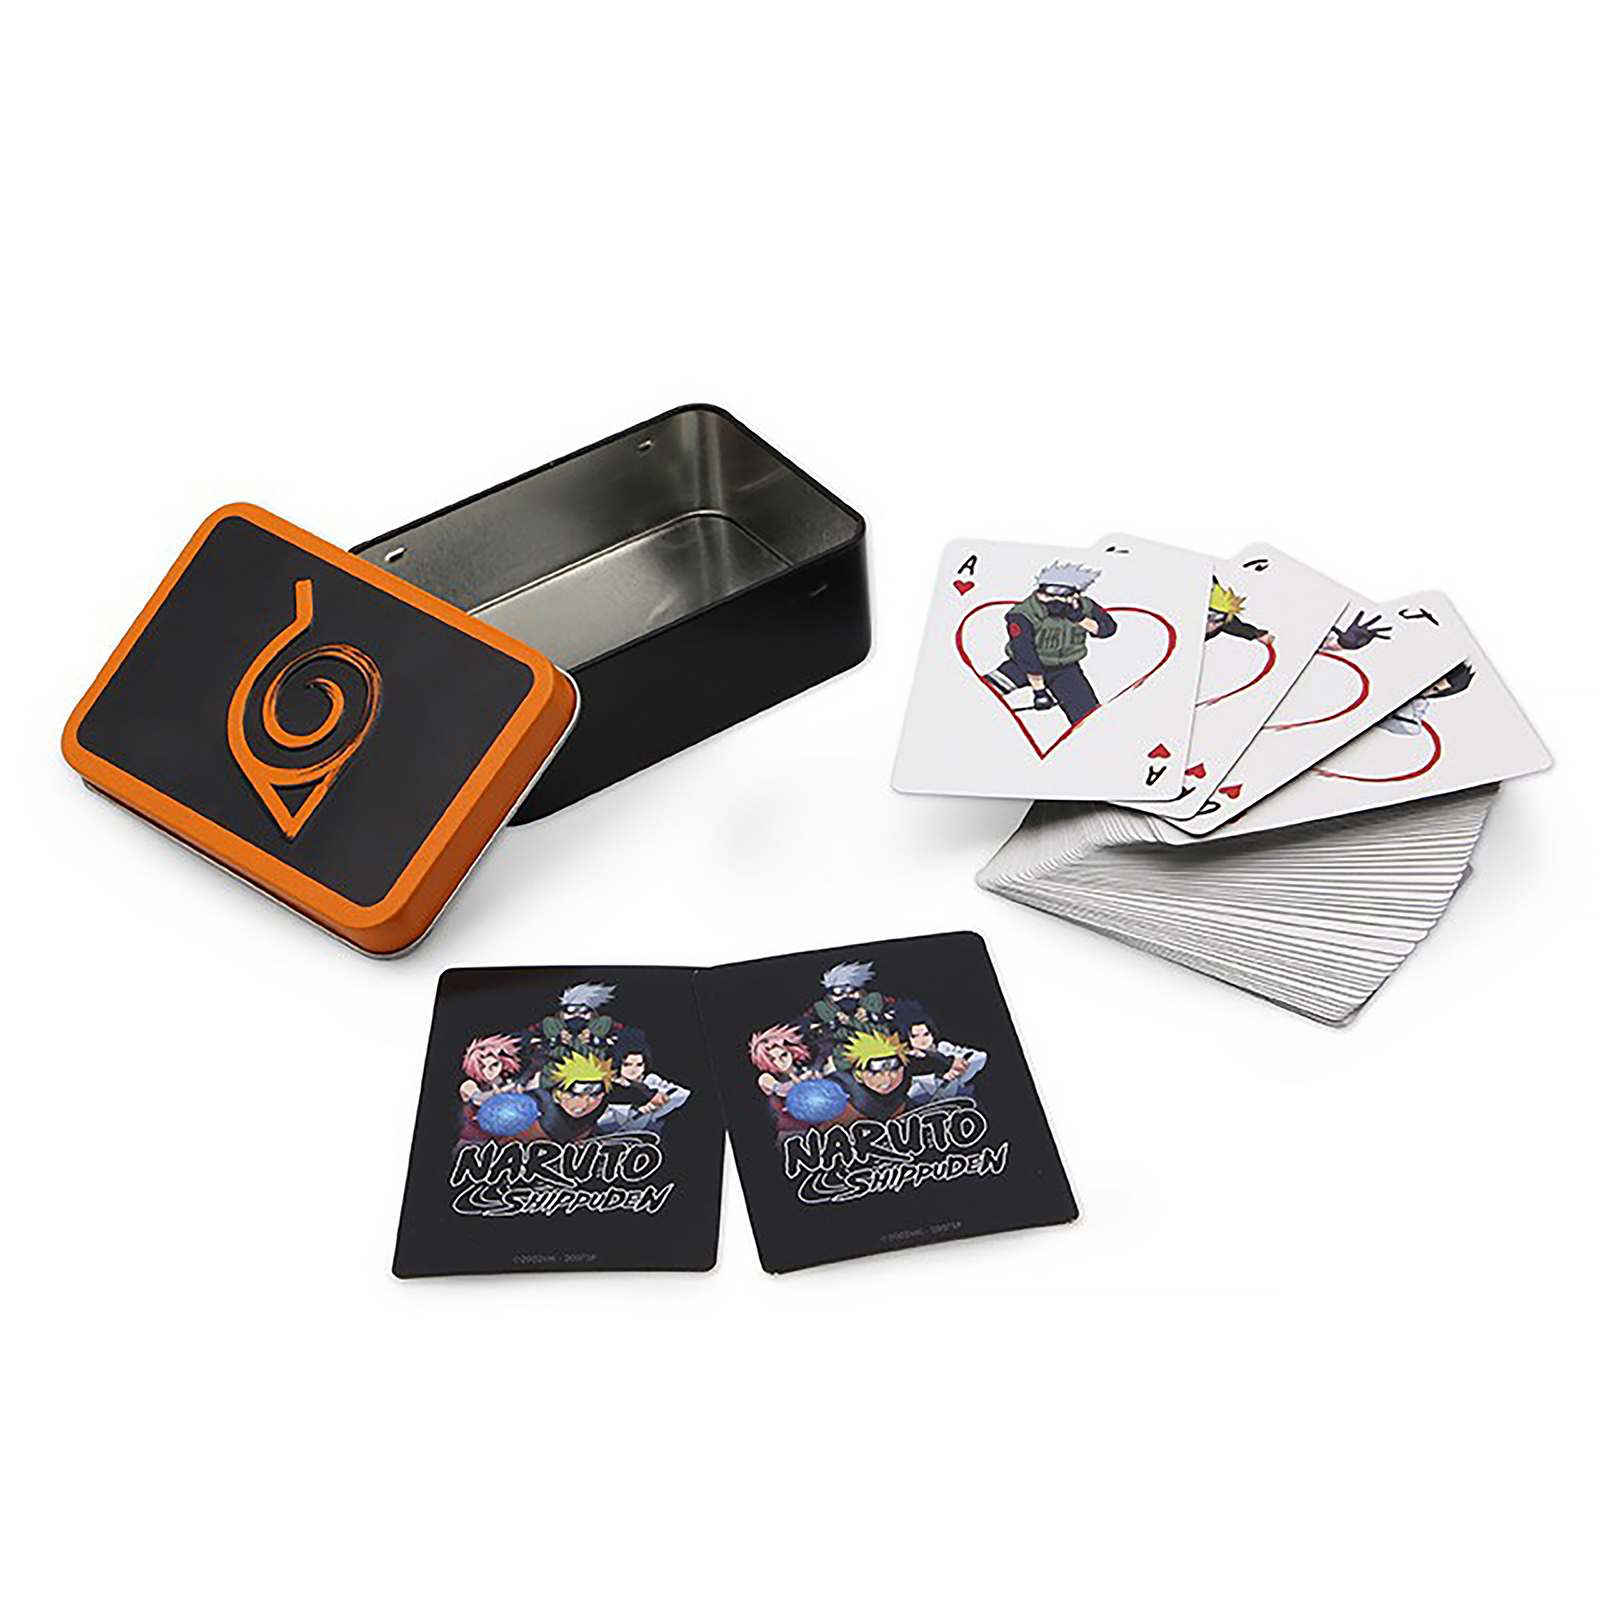 Naruto Shippuden - Konoha Symbol Playing Cards in Metal Box